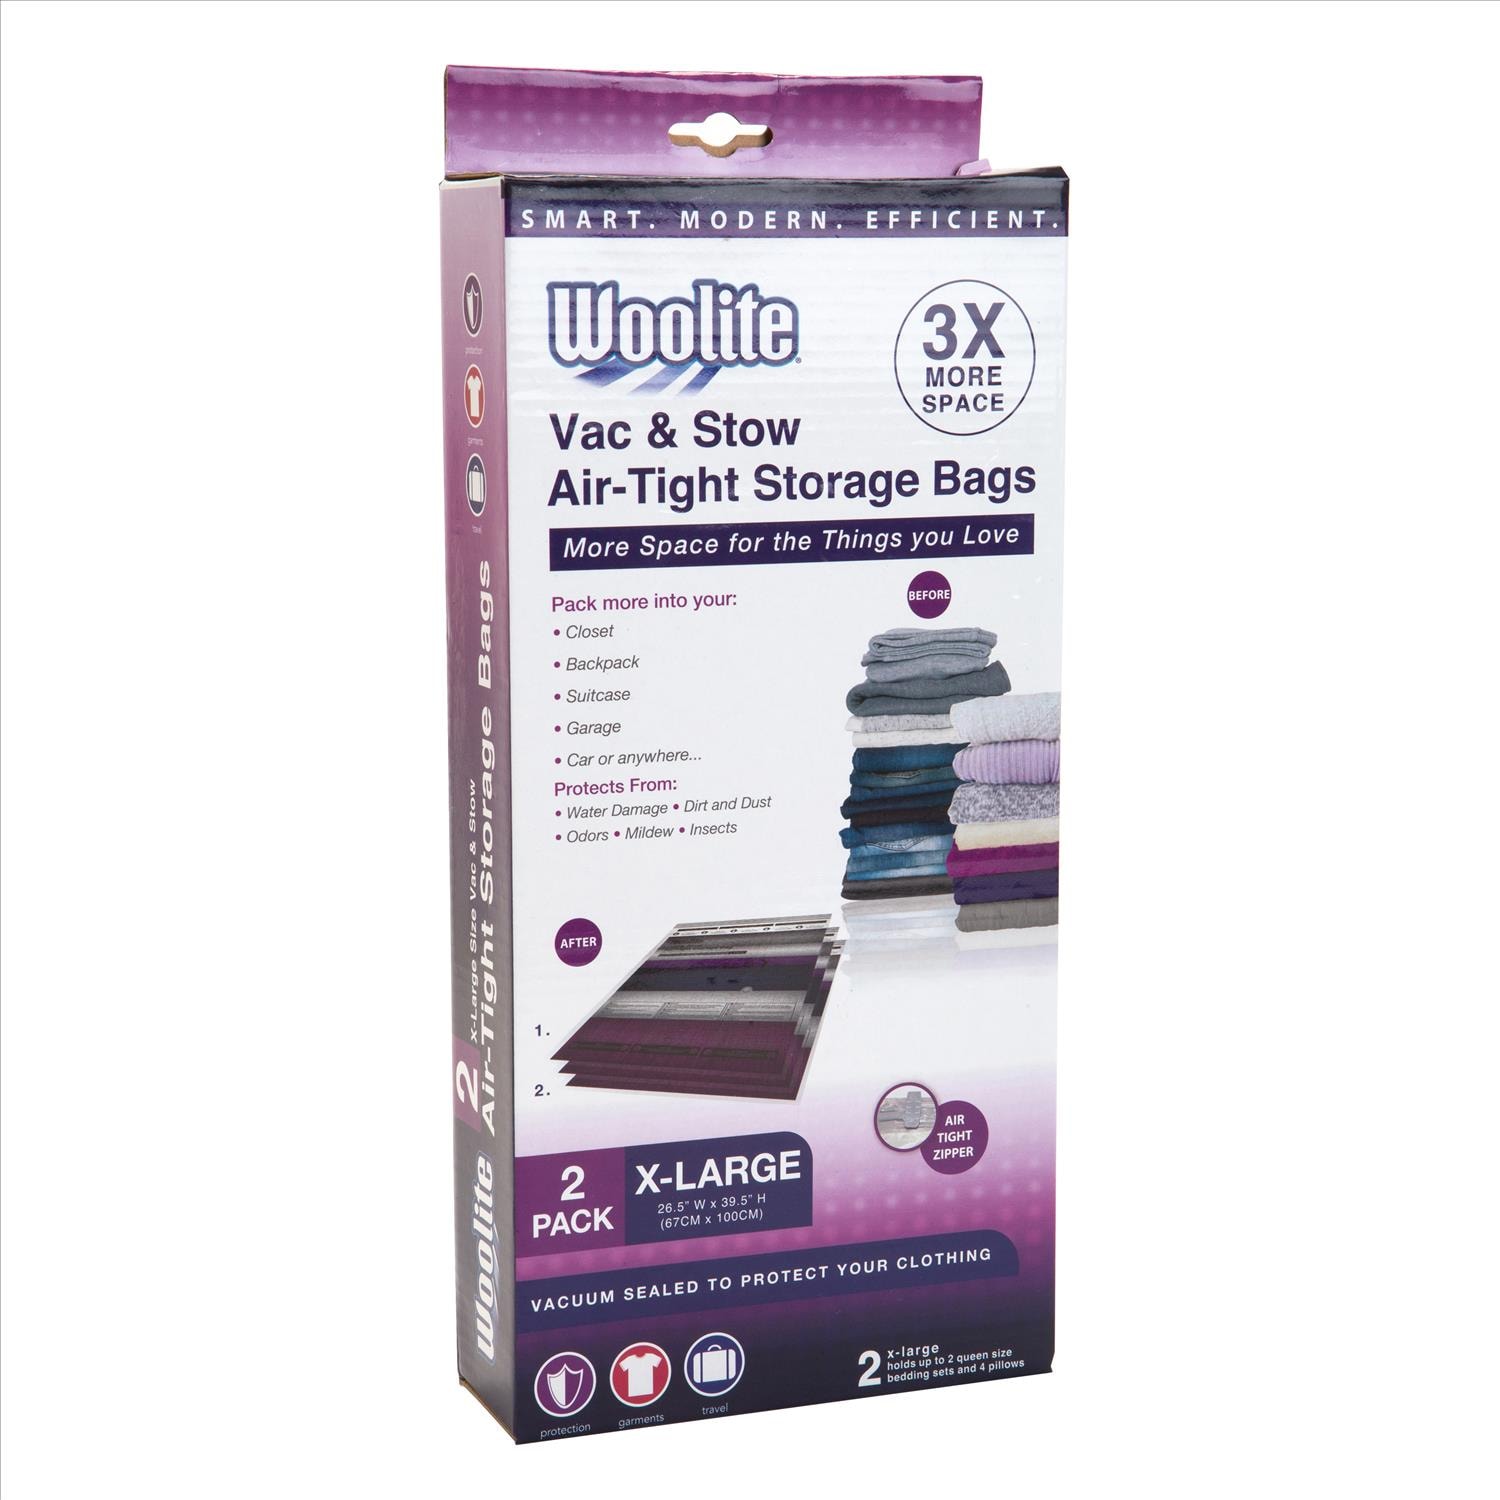 Vacuum Storage Bags with Electric Air Pump, 25 Pack (5 Jumbo, 5